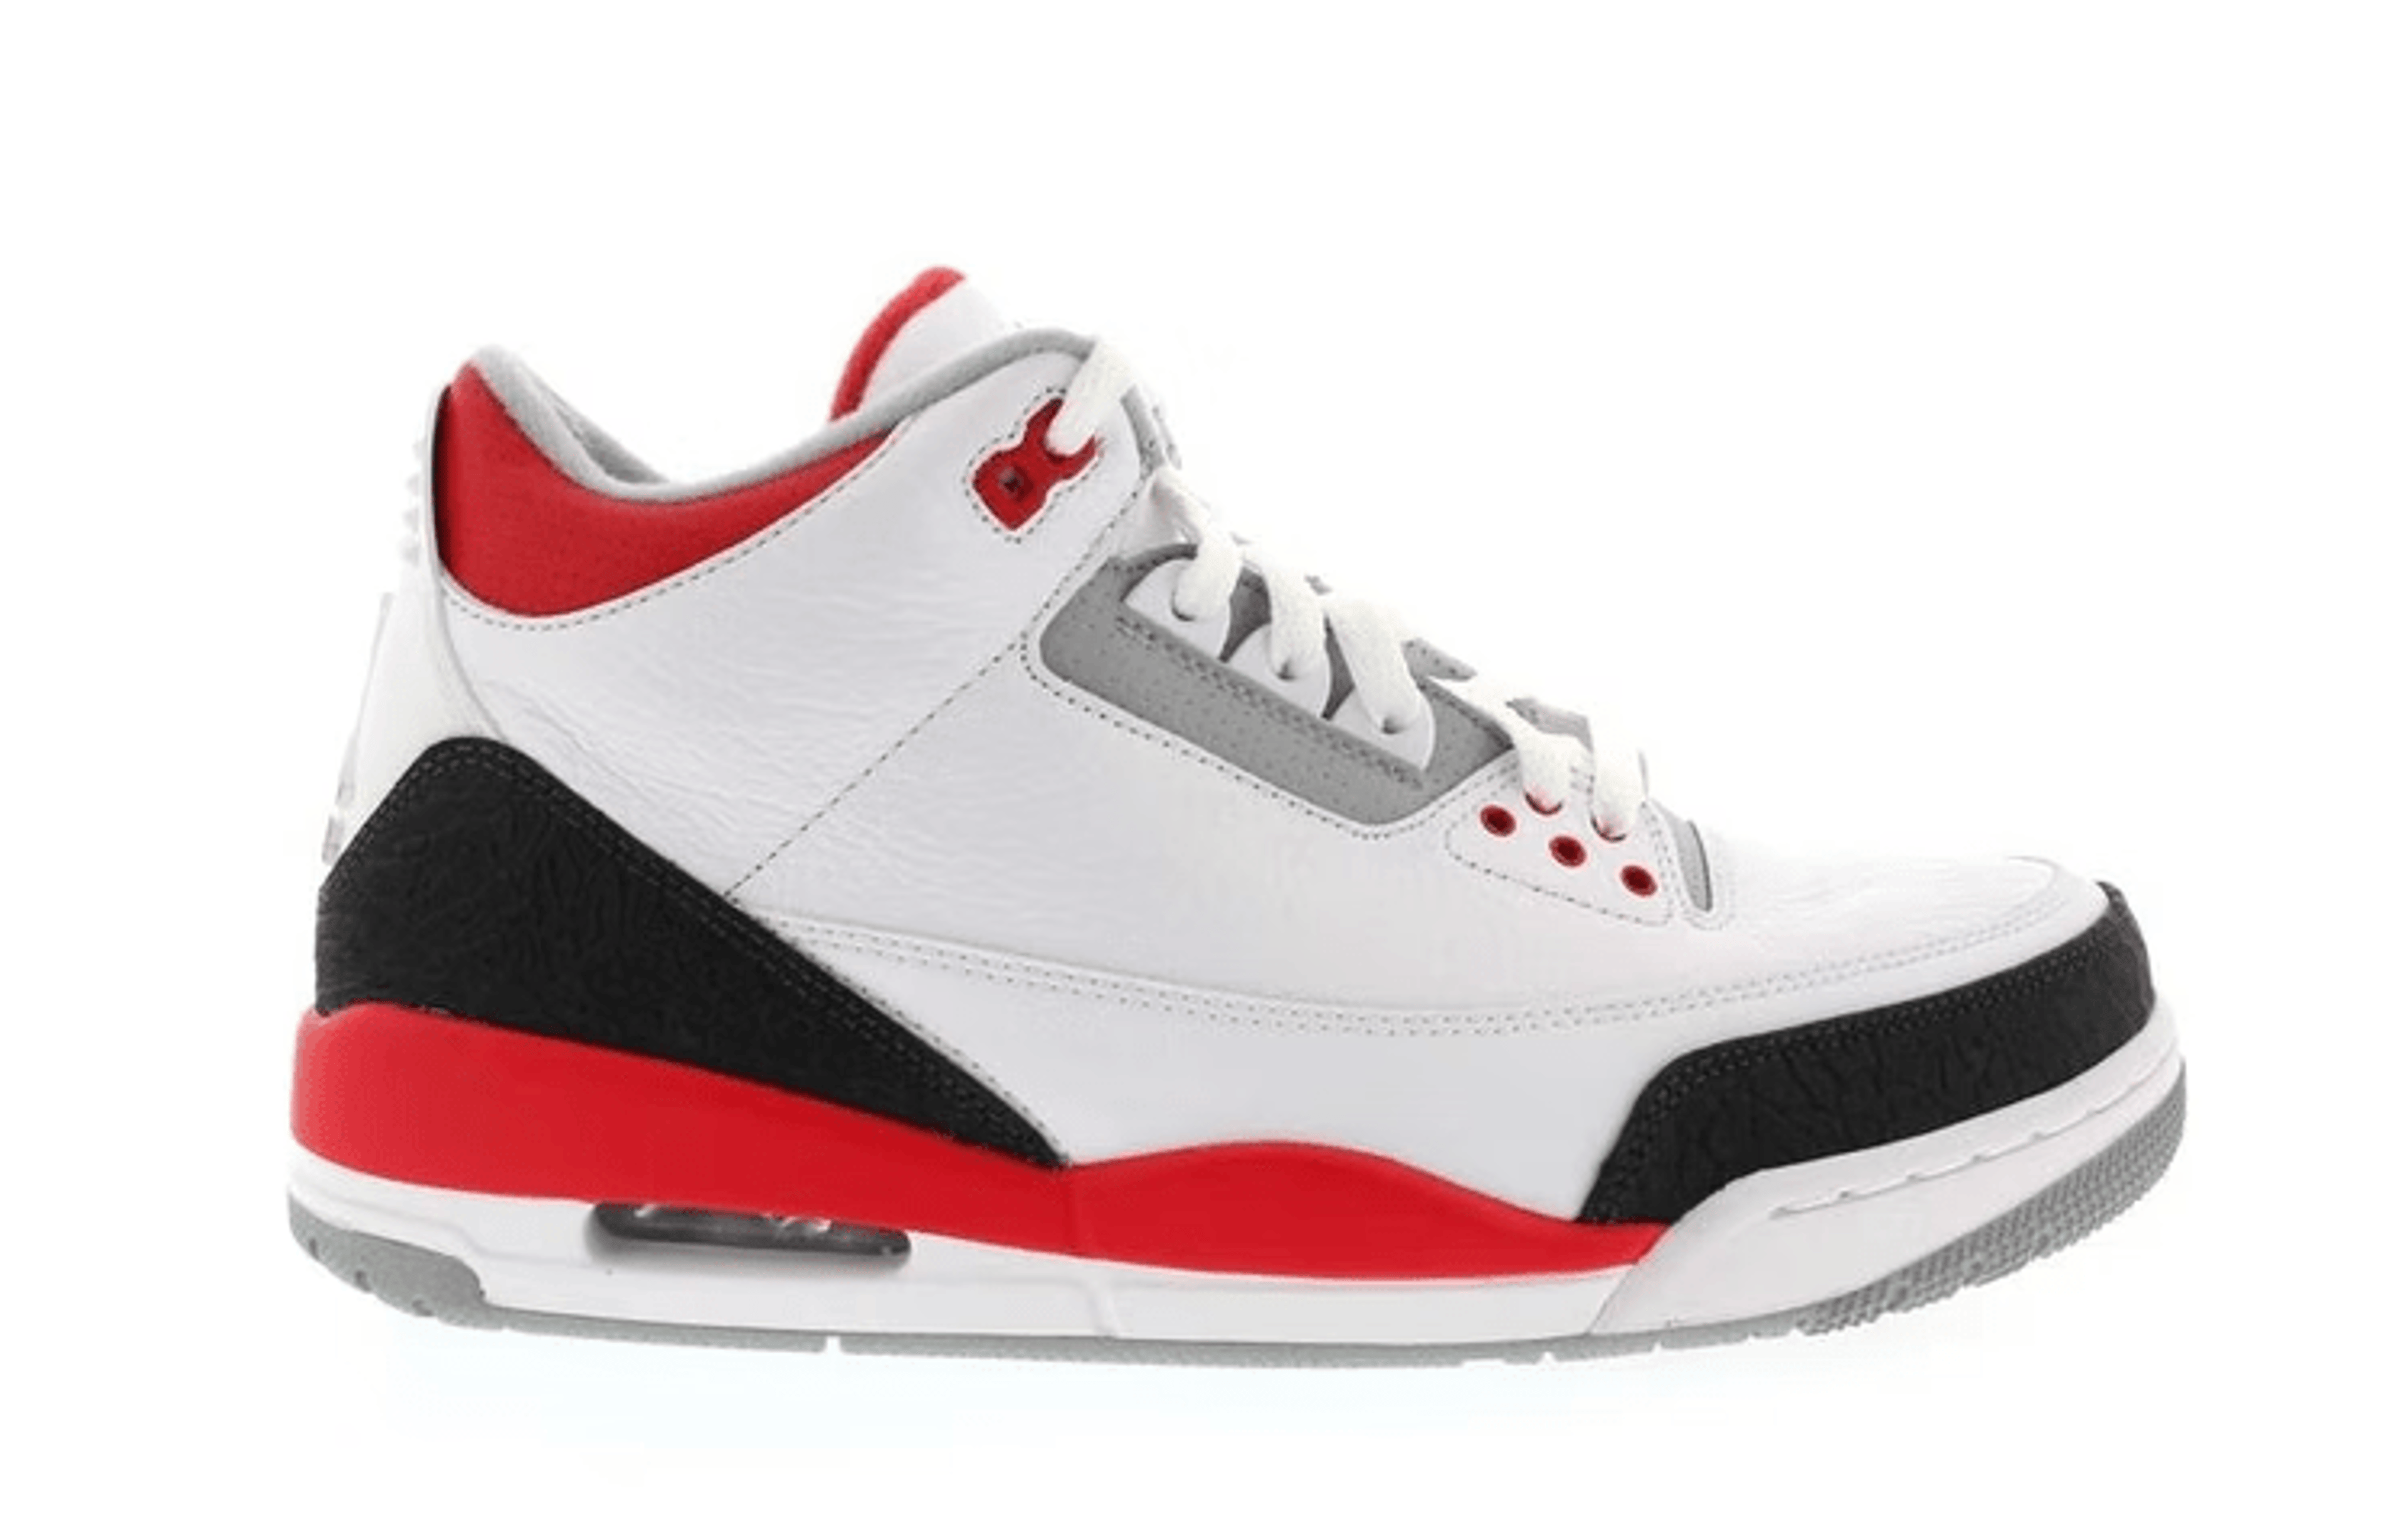 Air Jordan 3 Retro Fire Red (2013)